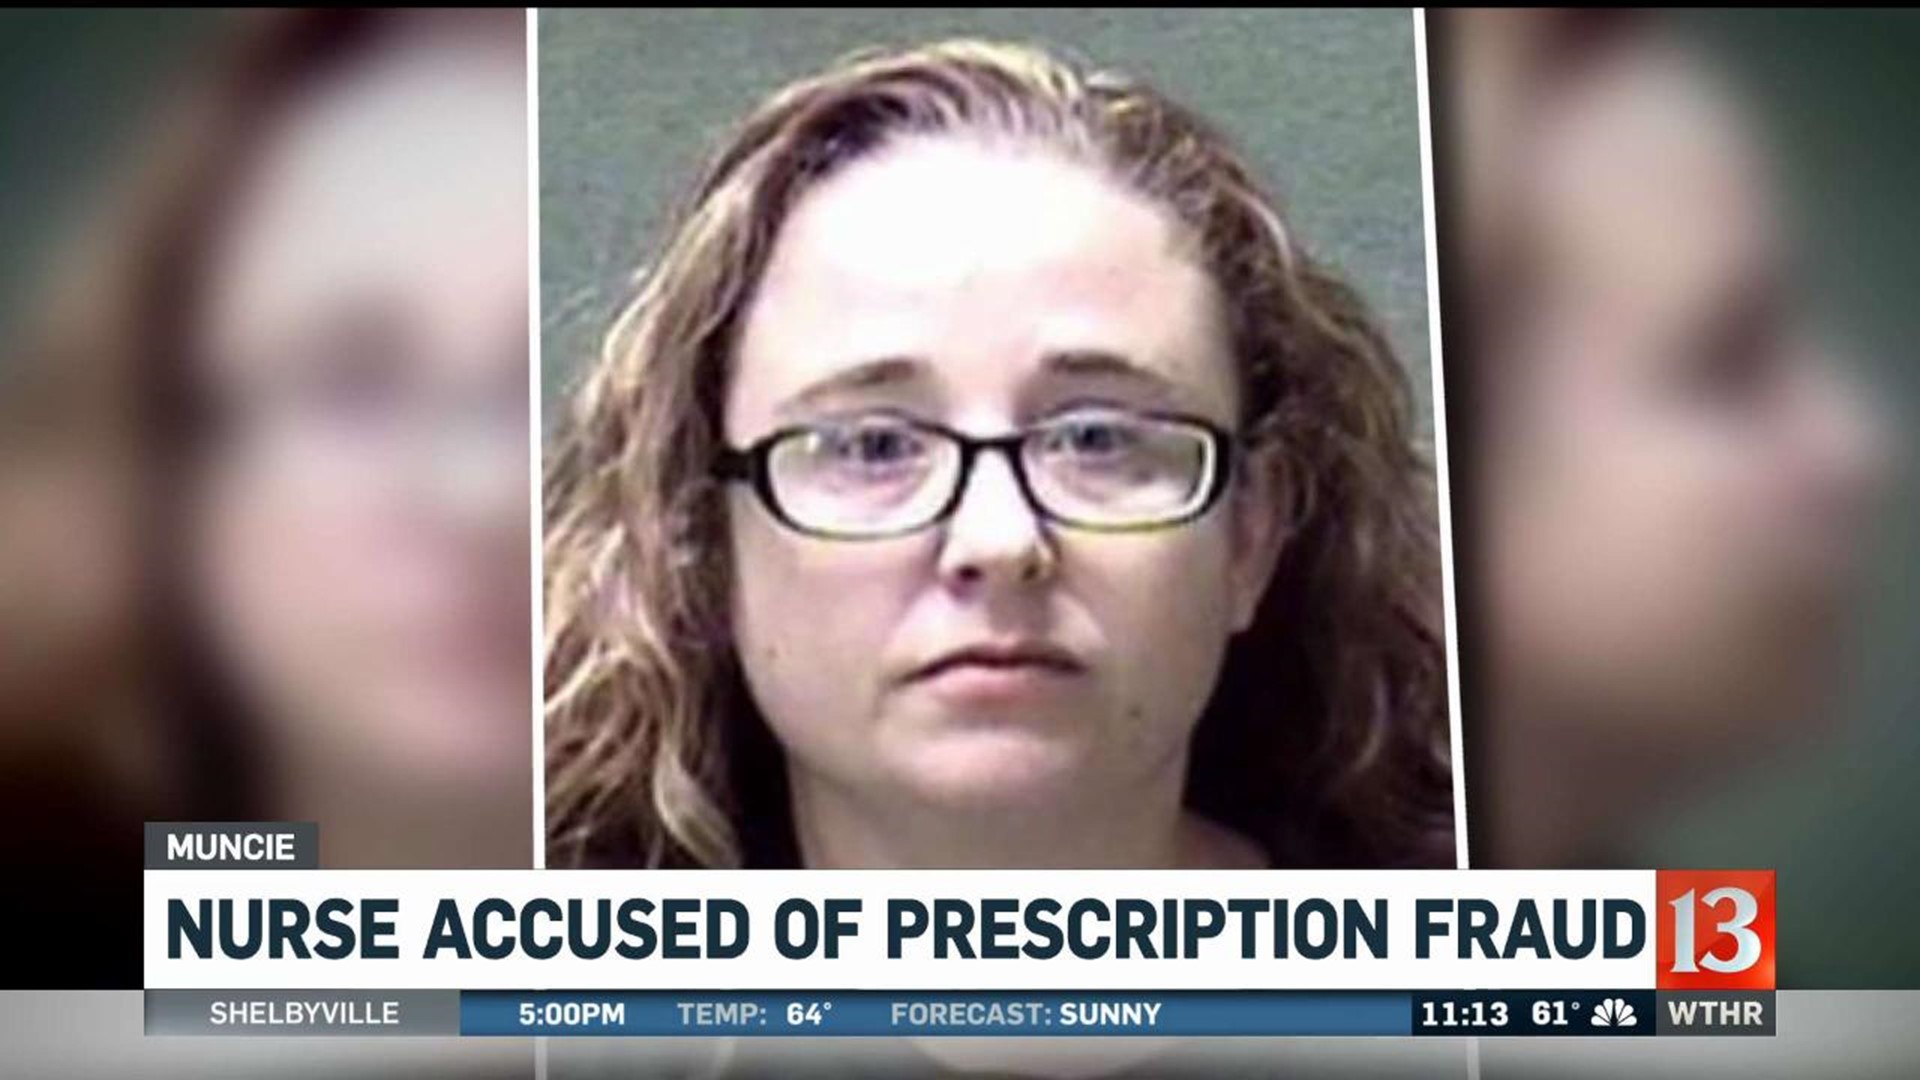 Muncie Nurse Charged With Prescription Fraud